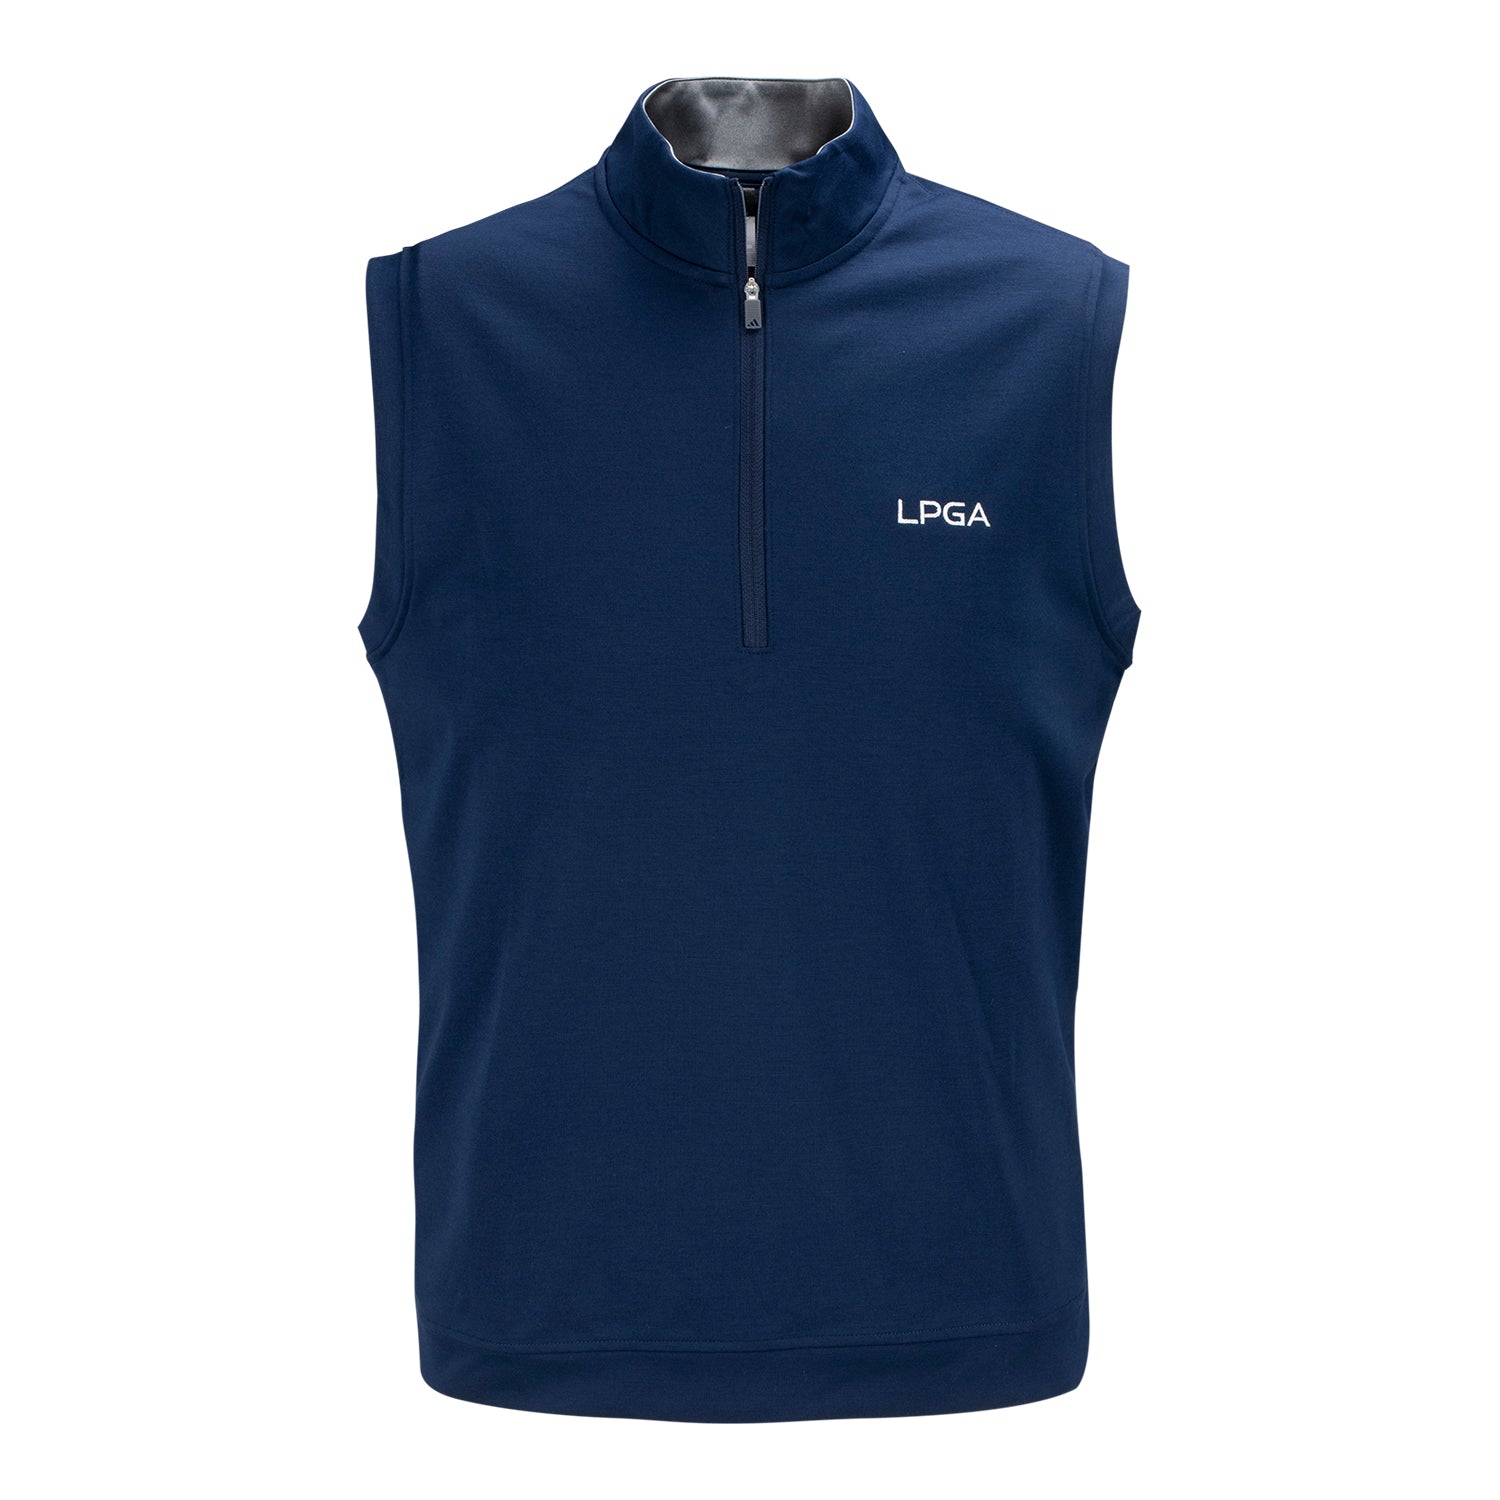 Adidas LPGA Golf Men's Authentic Quarter Zip Vest - Front View